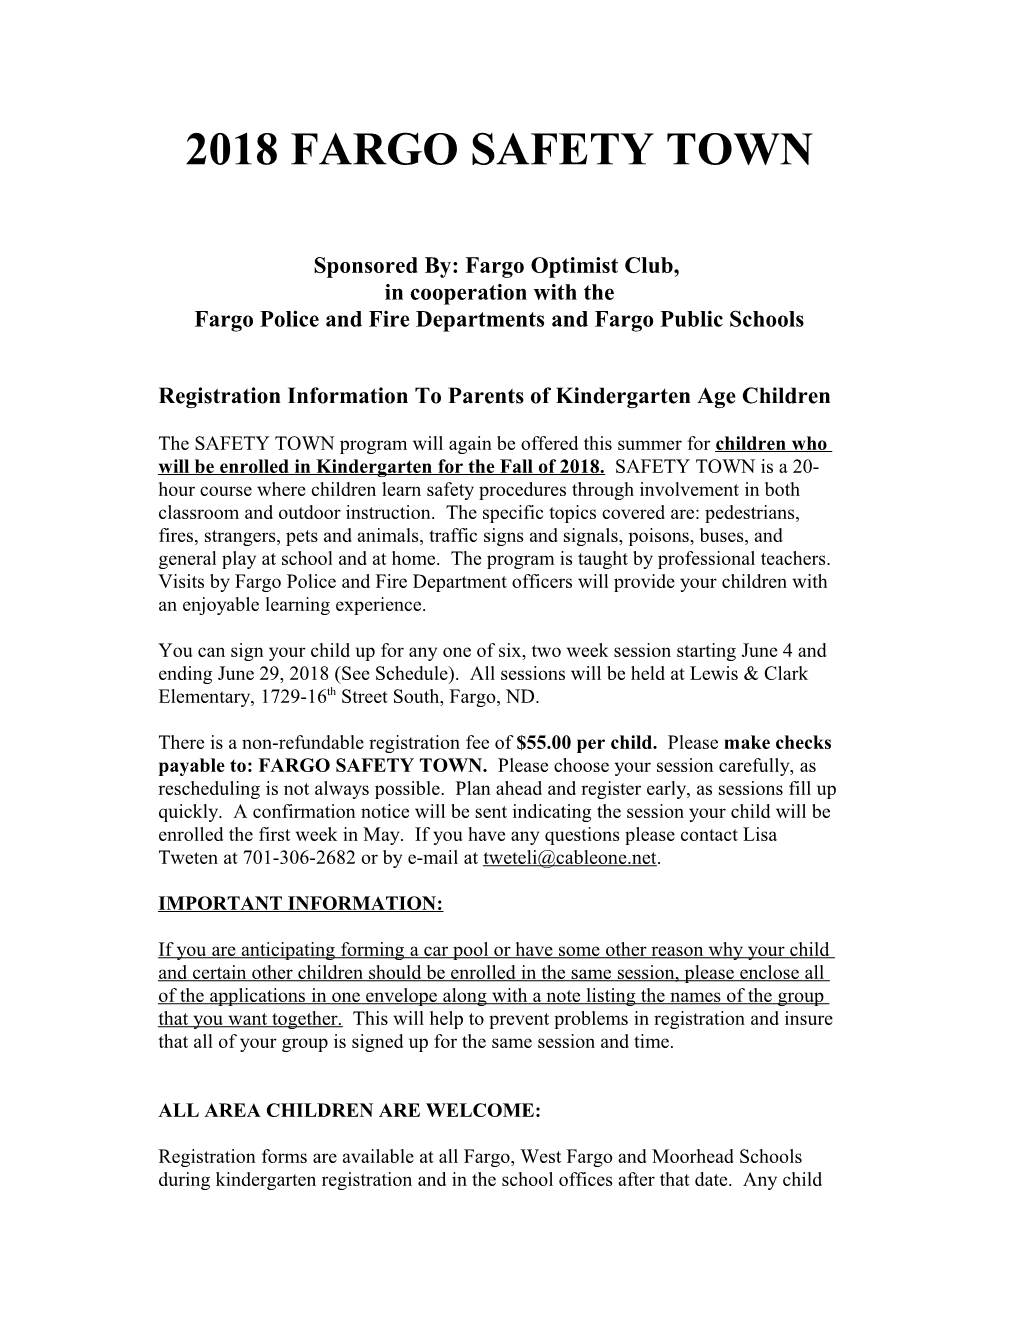 2018 Fargo Safety Town